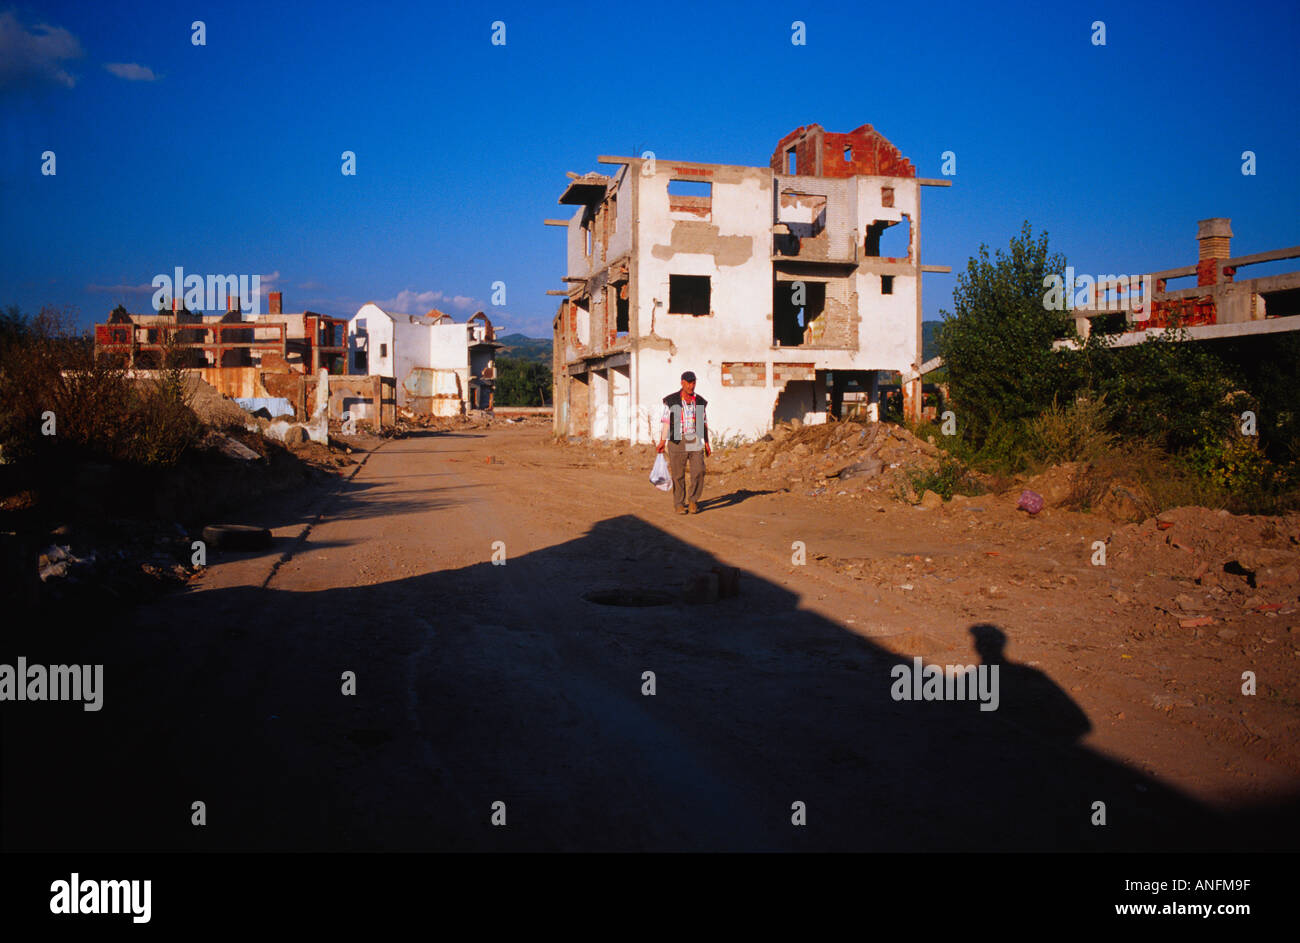 a man walks by abanedoned serb houses, mitrovica, kosovo Stock Photo